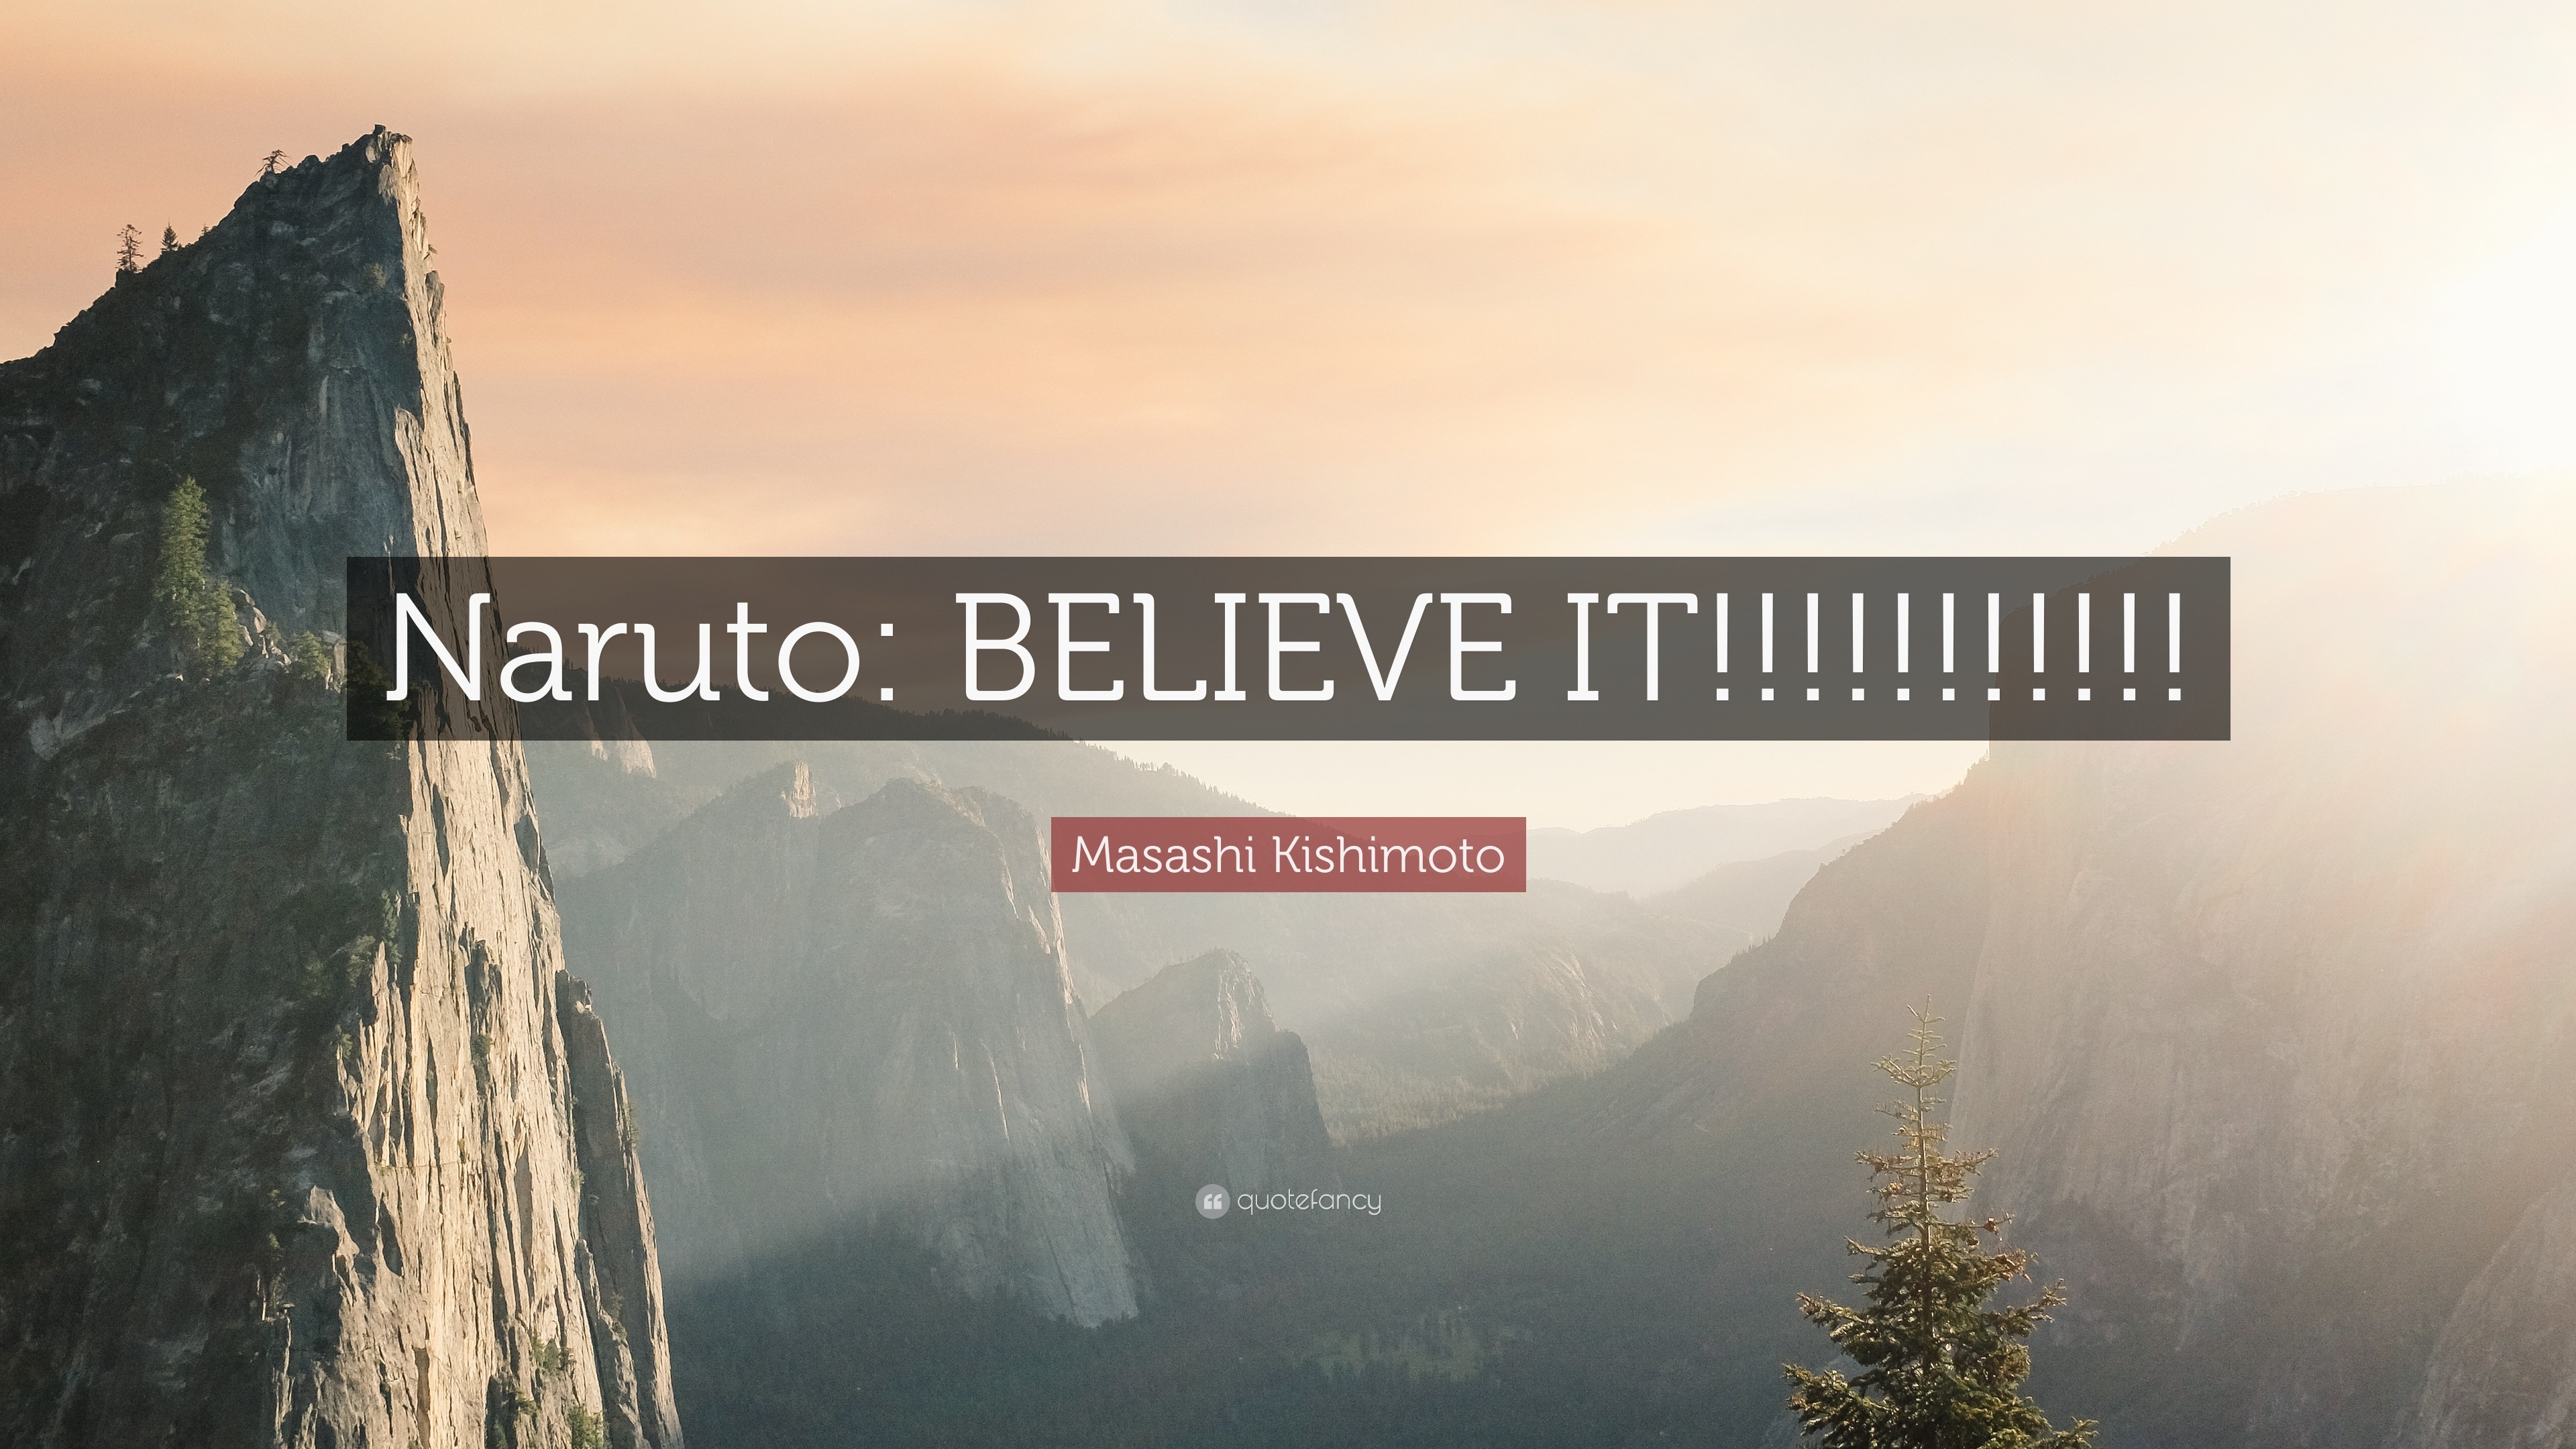 Masashi Kishimoto Quote: “Naruto: BELIEVE IT!!!!!!!!!!!”